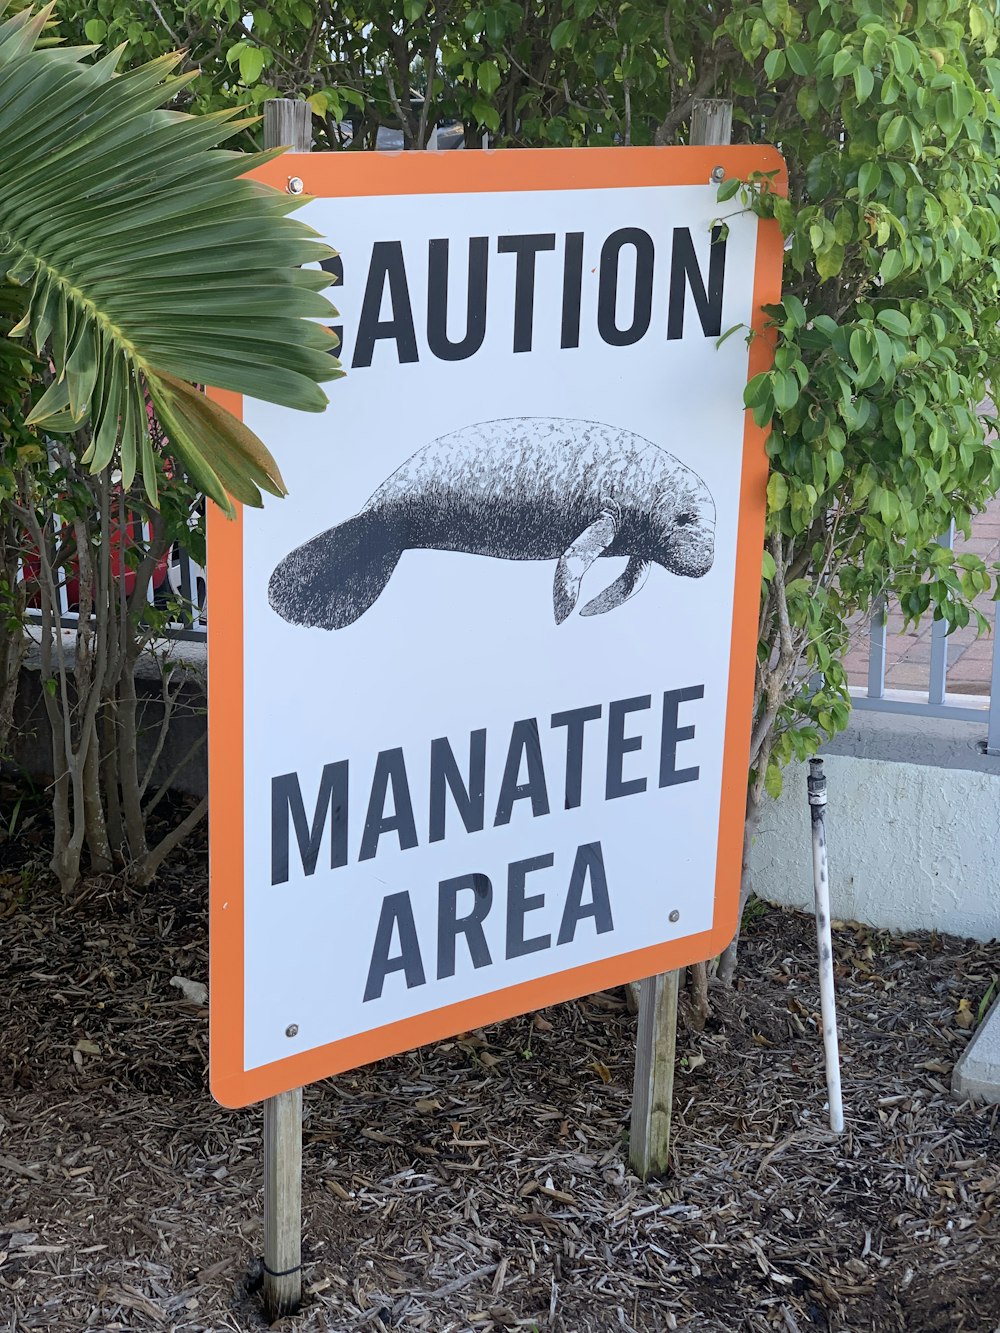 Caution Manatee area sign